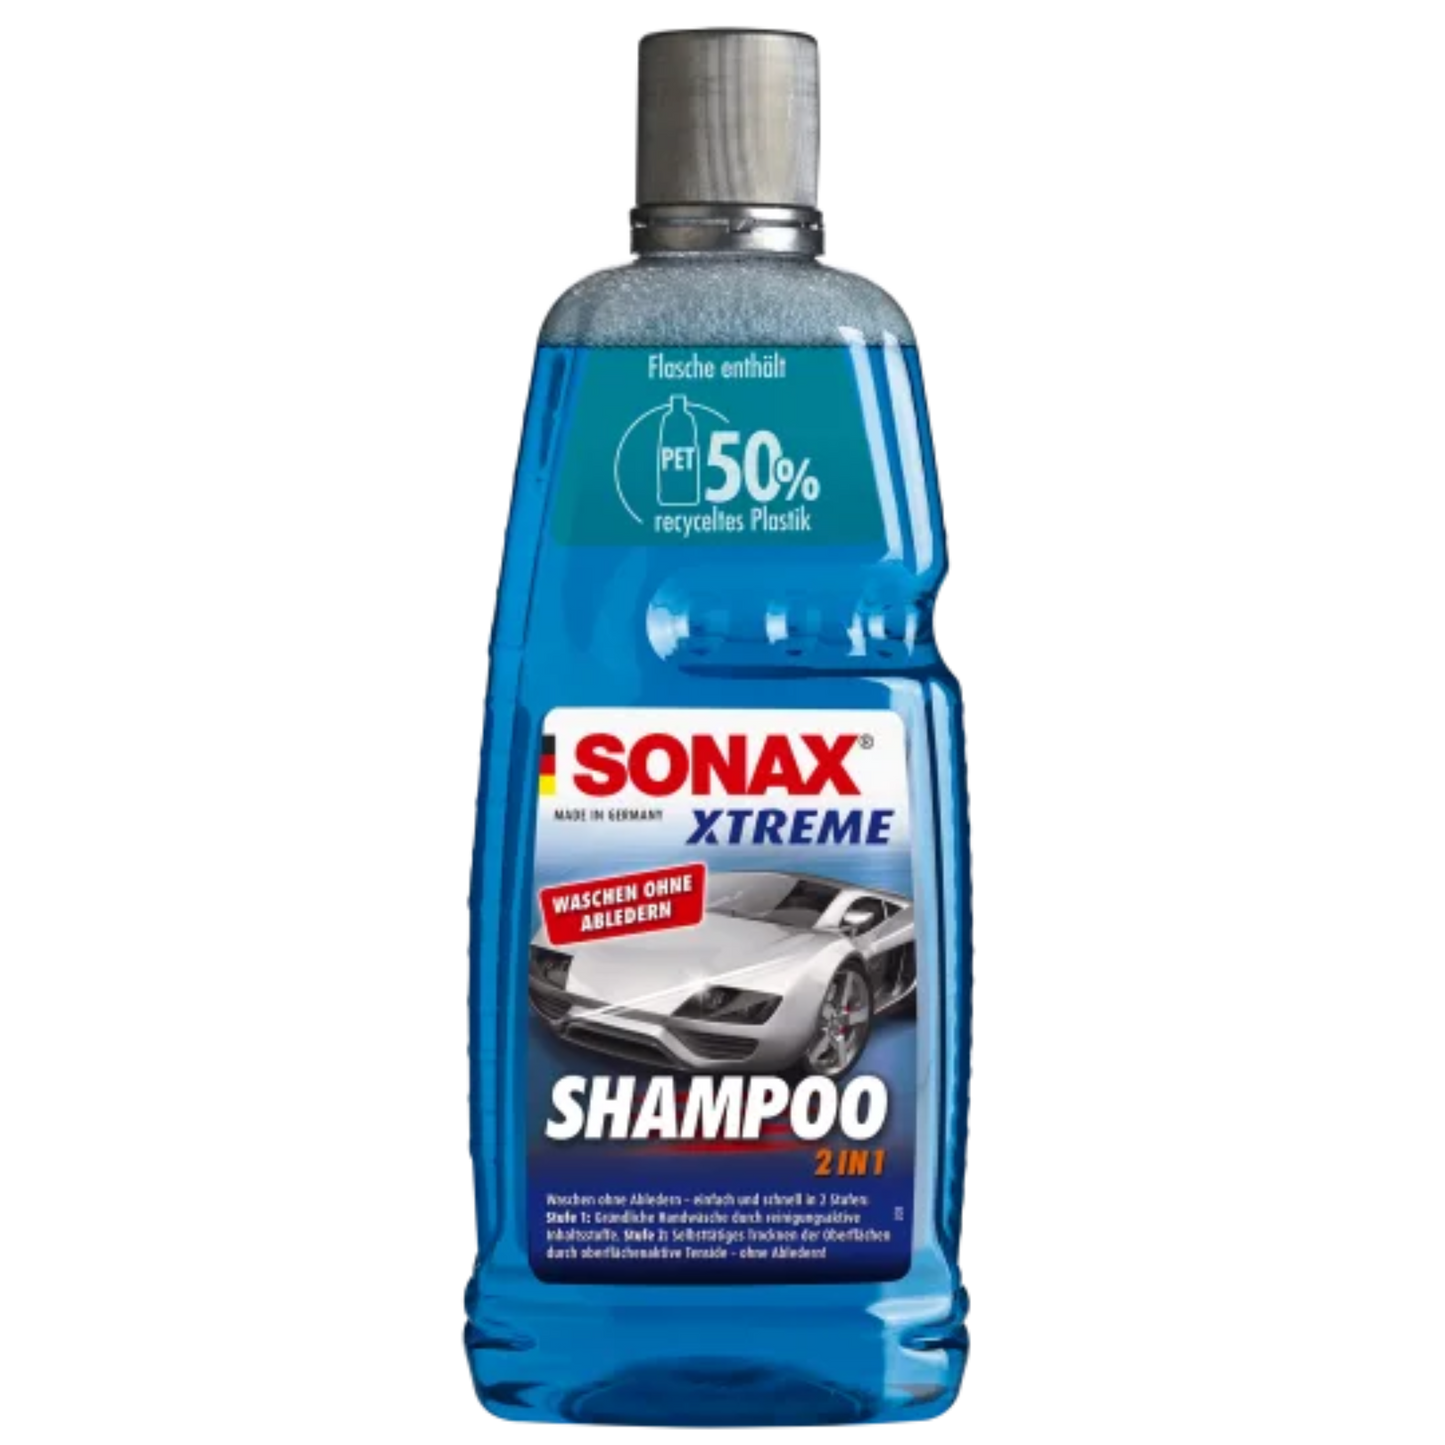 SONAX XTREME Shampoo 2 in 1, 1l